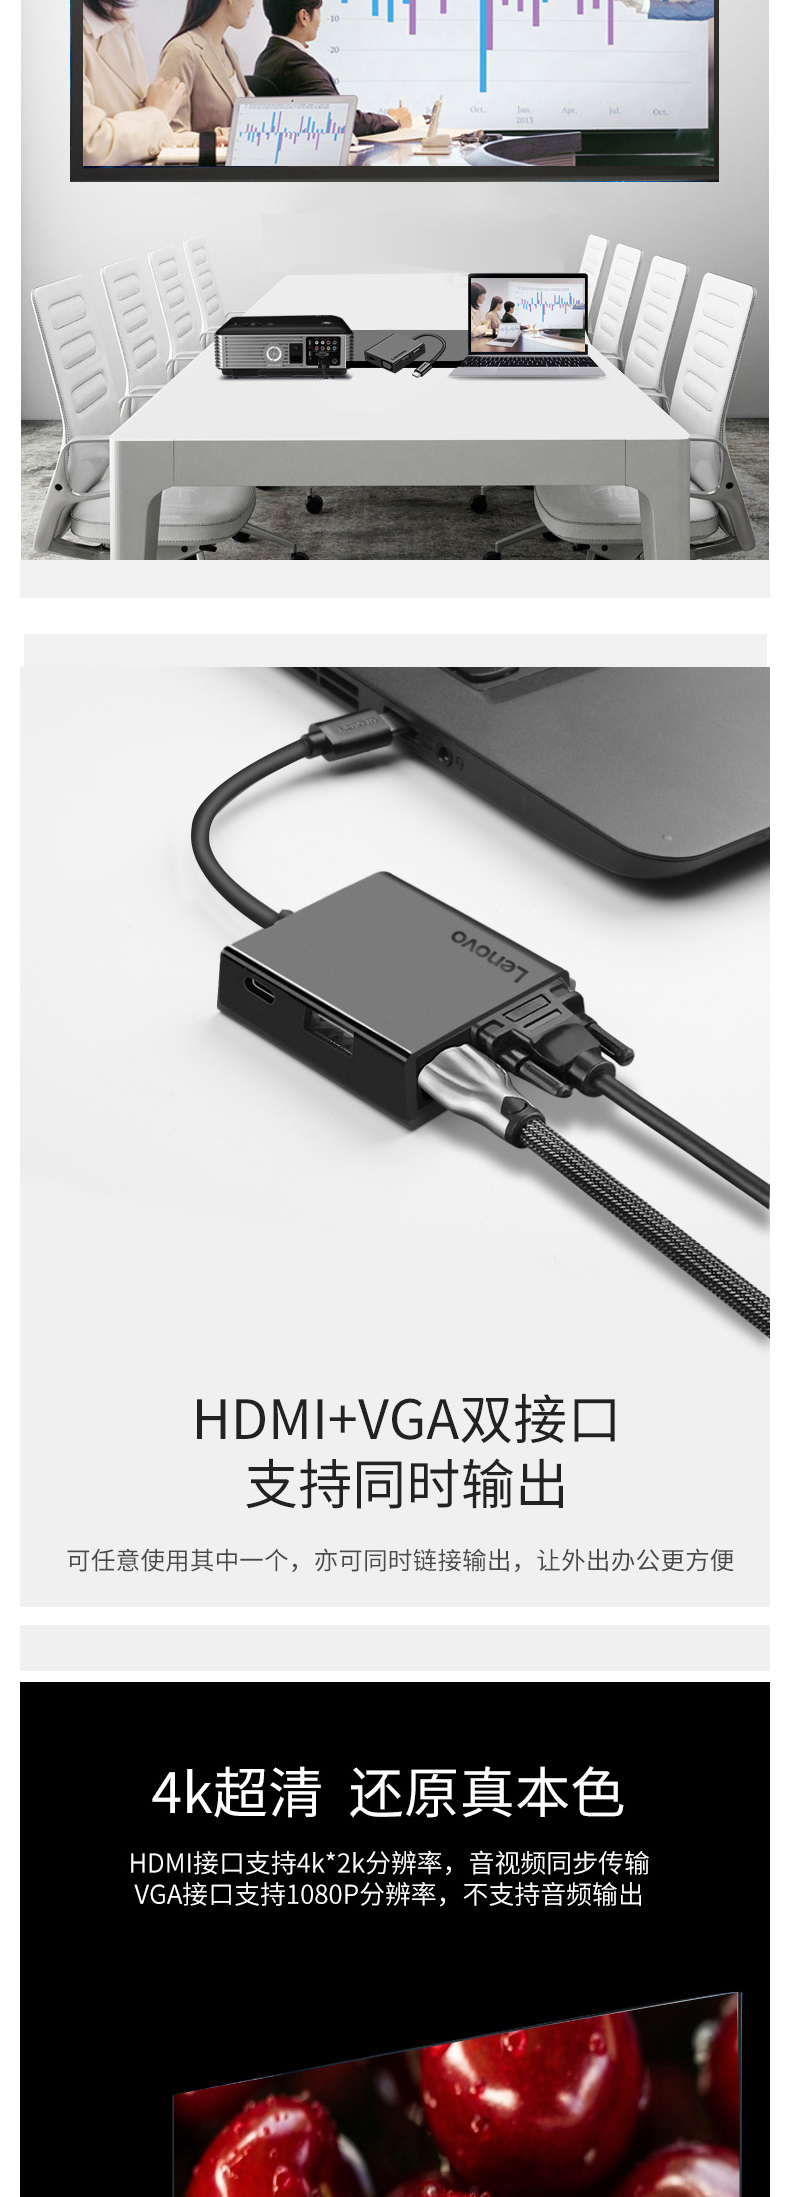 联想 lenovo 拓展坞 C120 HDMI VGA USB-C USB 